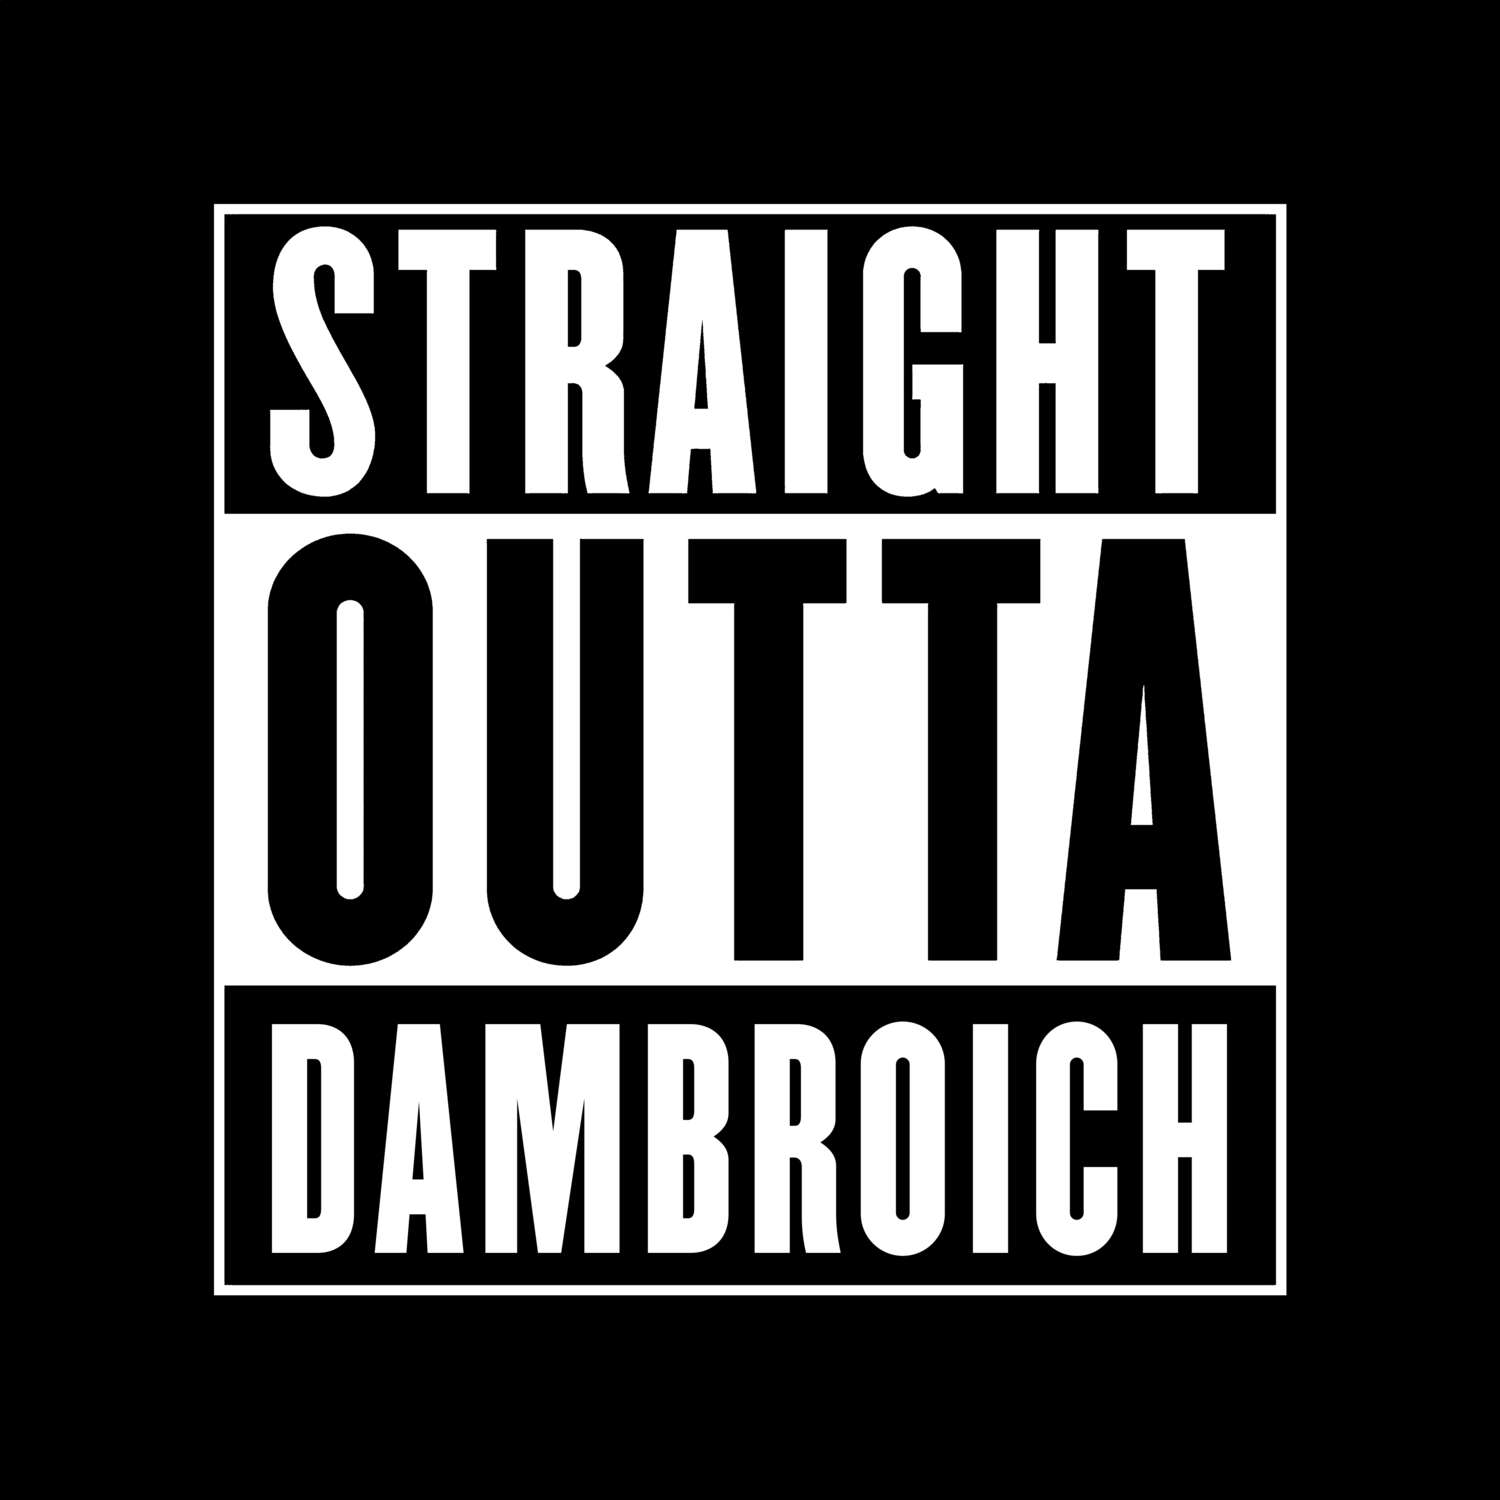 Dambroich T-Shirt »Straight Outta«